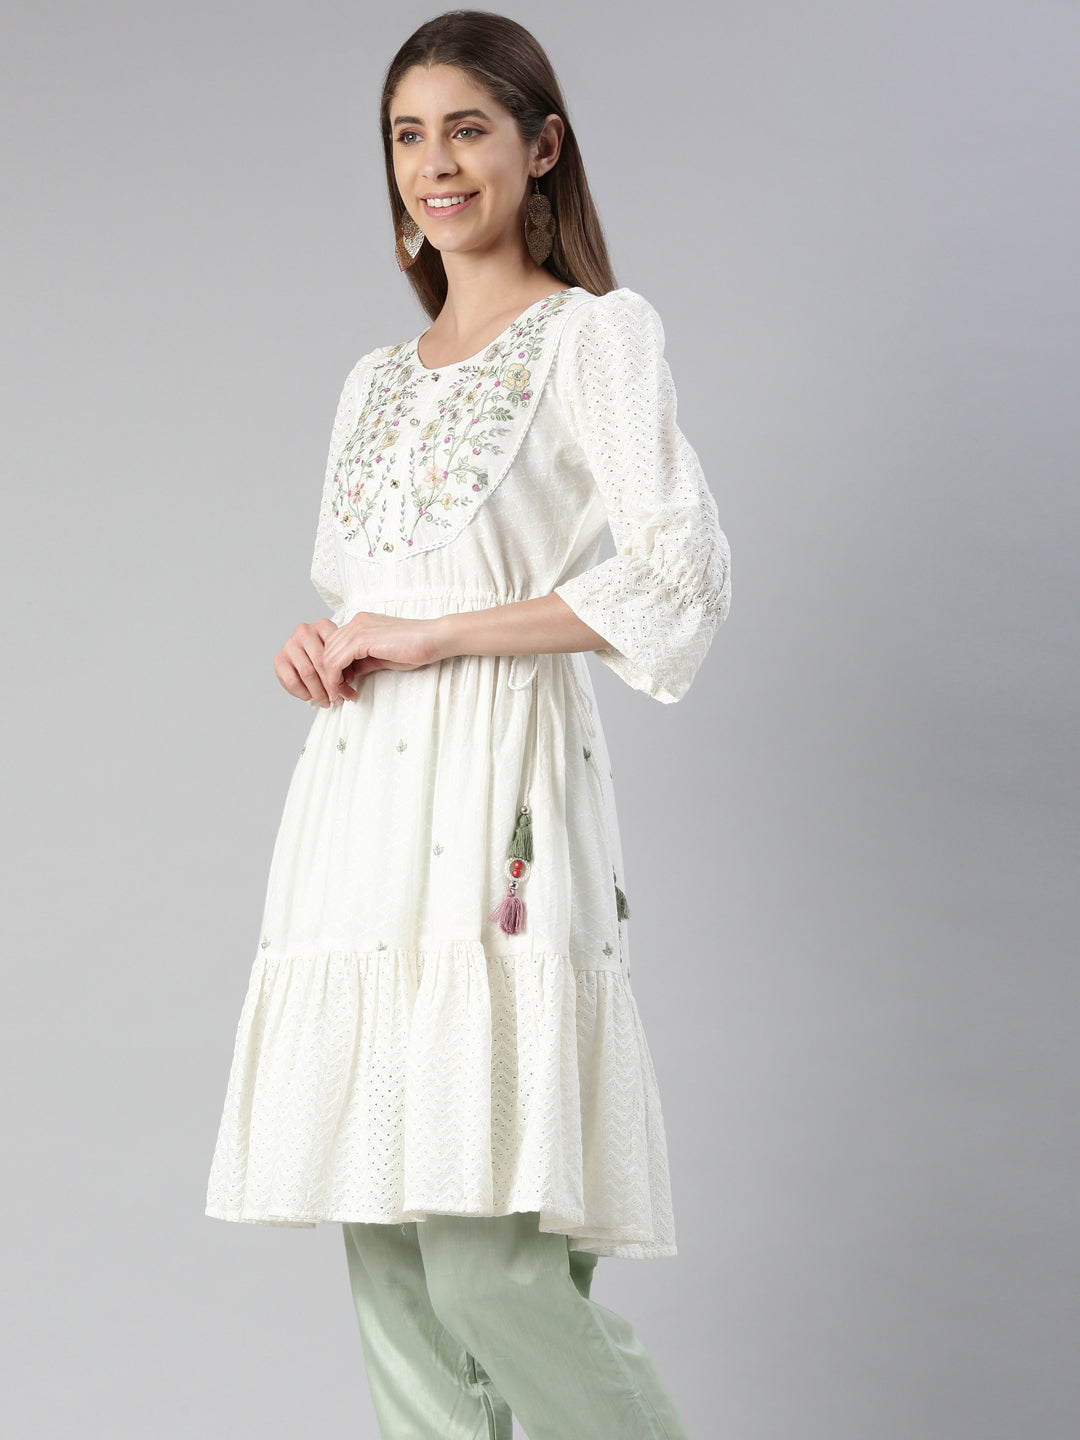 Neeru's Off White Anarkali Embroidered Cotton Kurtas